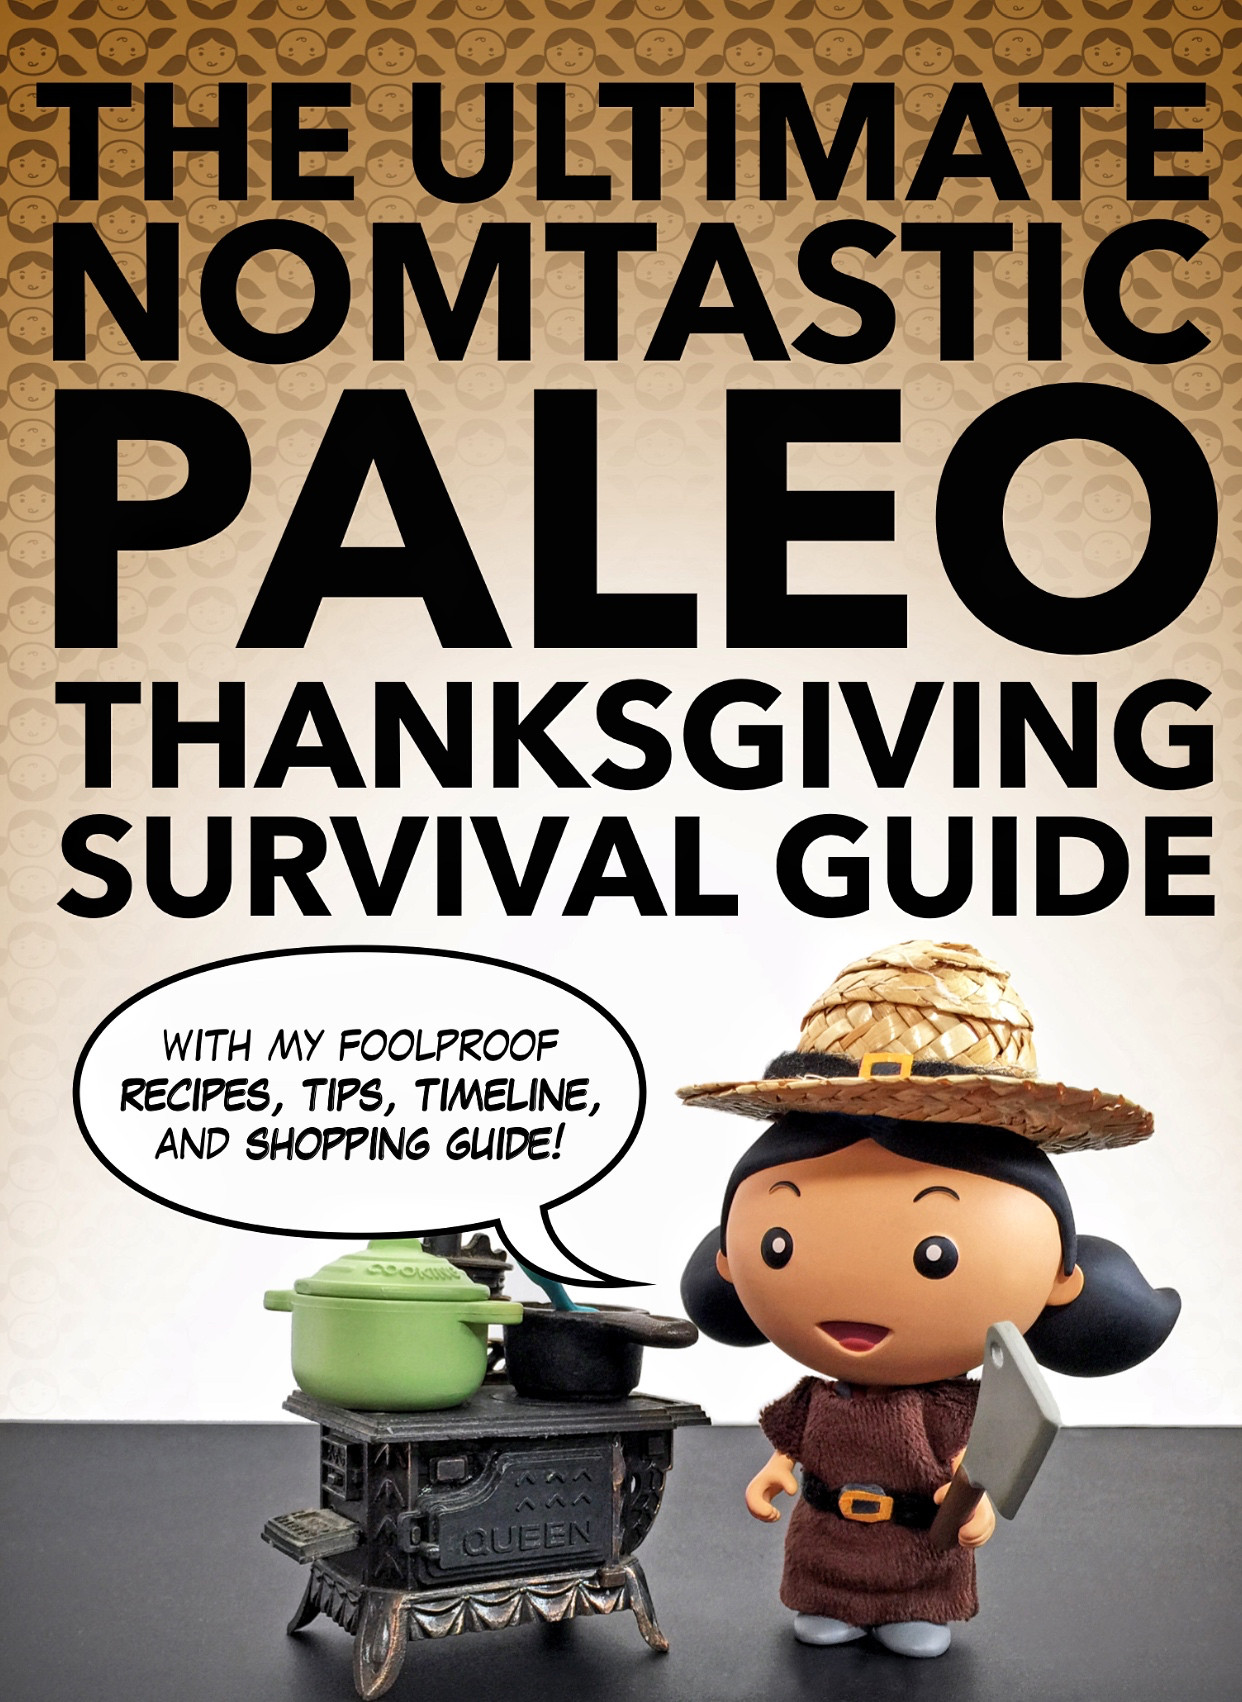 Nom Nom Paleo Thanksgiving
 The Ultimate Nomtastic Paleo Thanksgiving Survival Guide